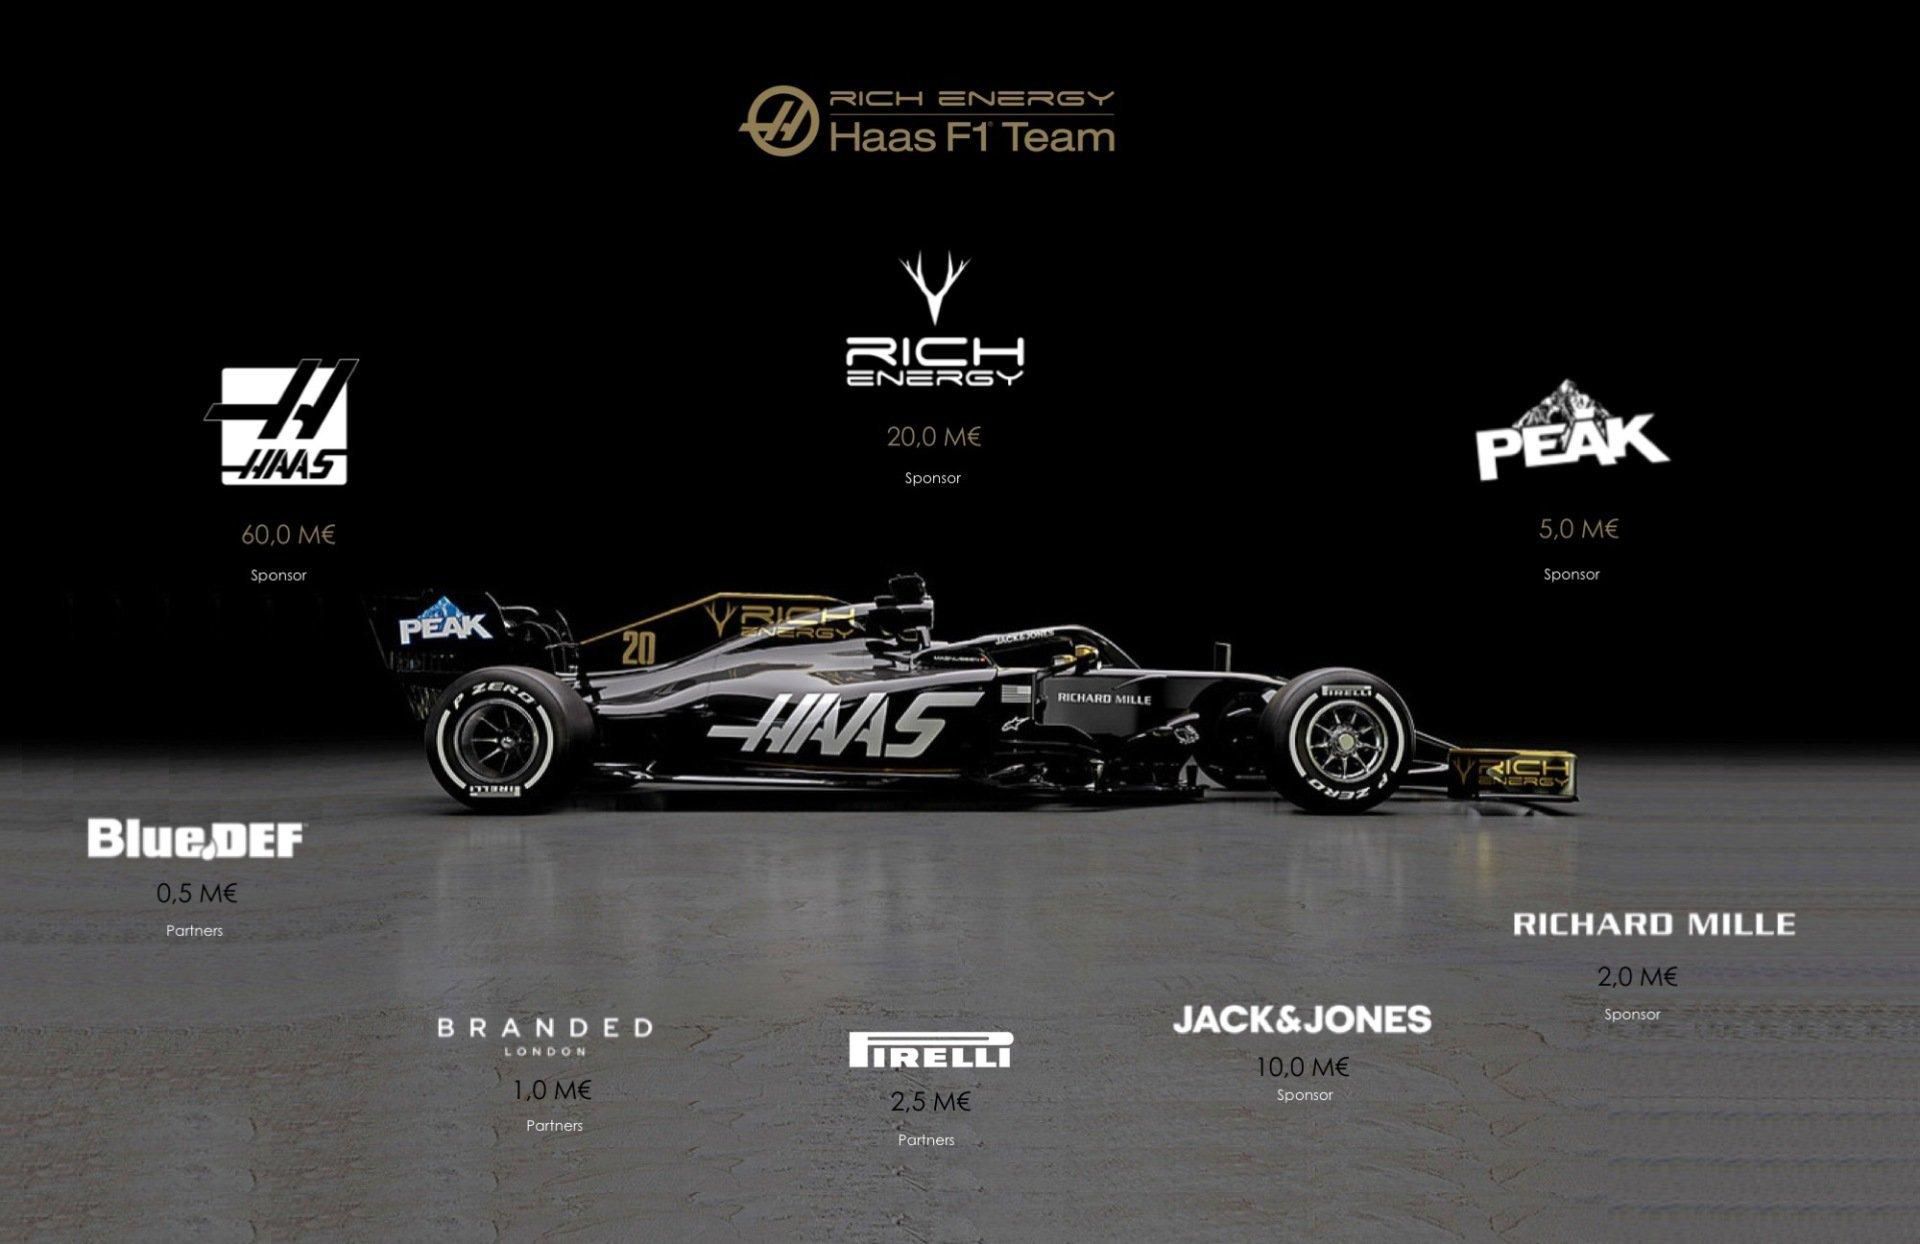 Rich Energy Haas F1 Team